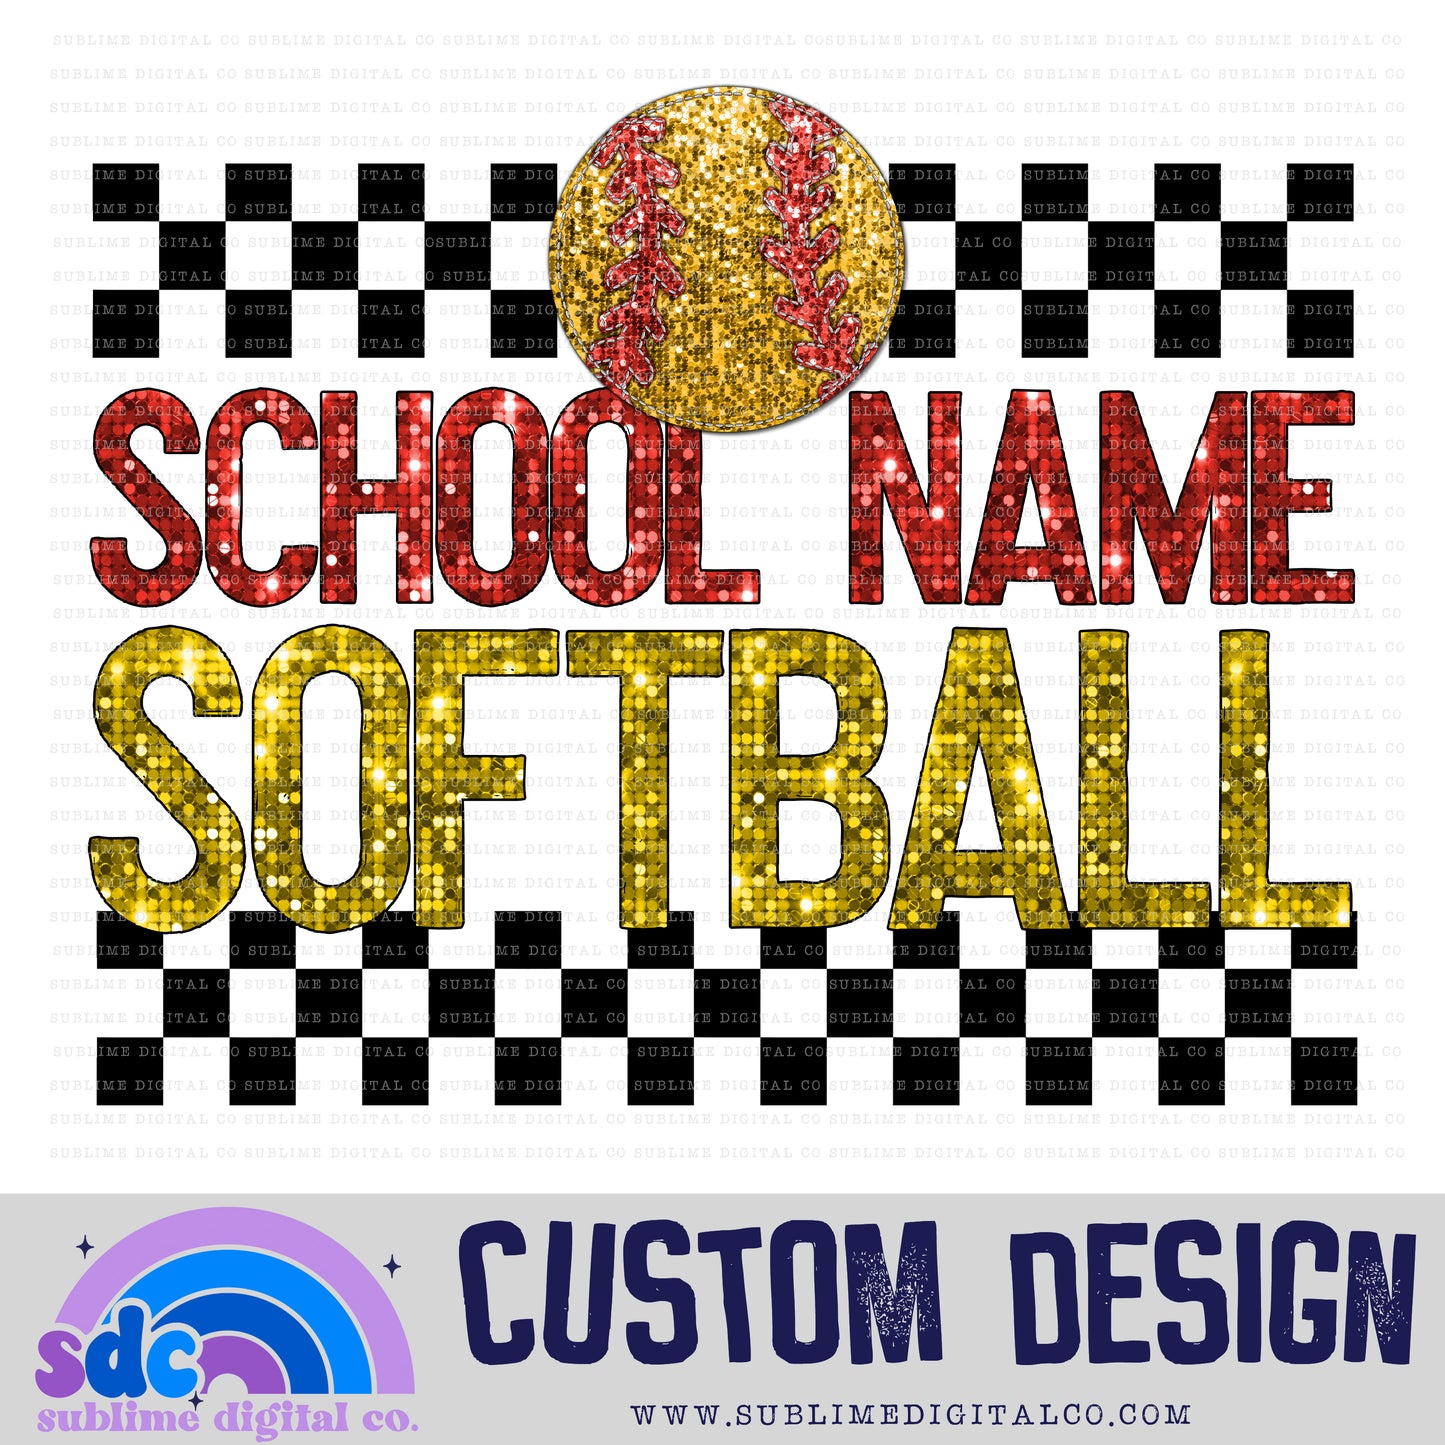 Softball • Custom Design • Sports • Customs • Instant Download • Sublimation Design